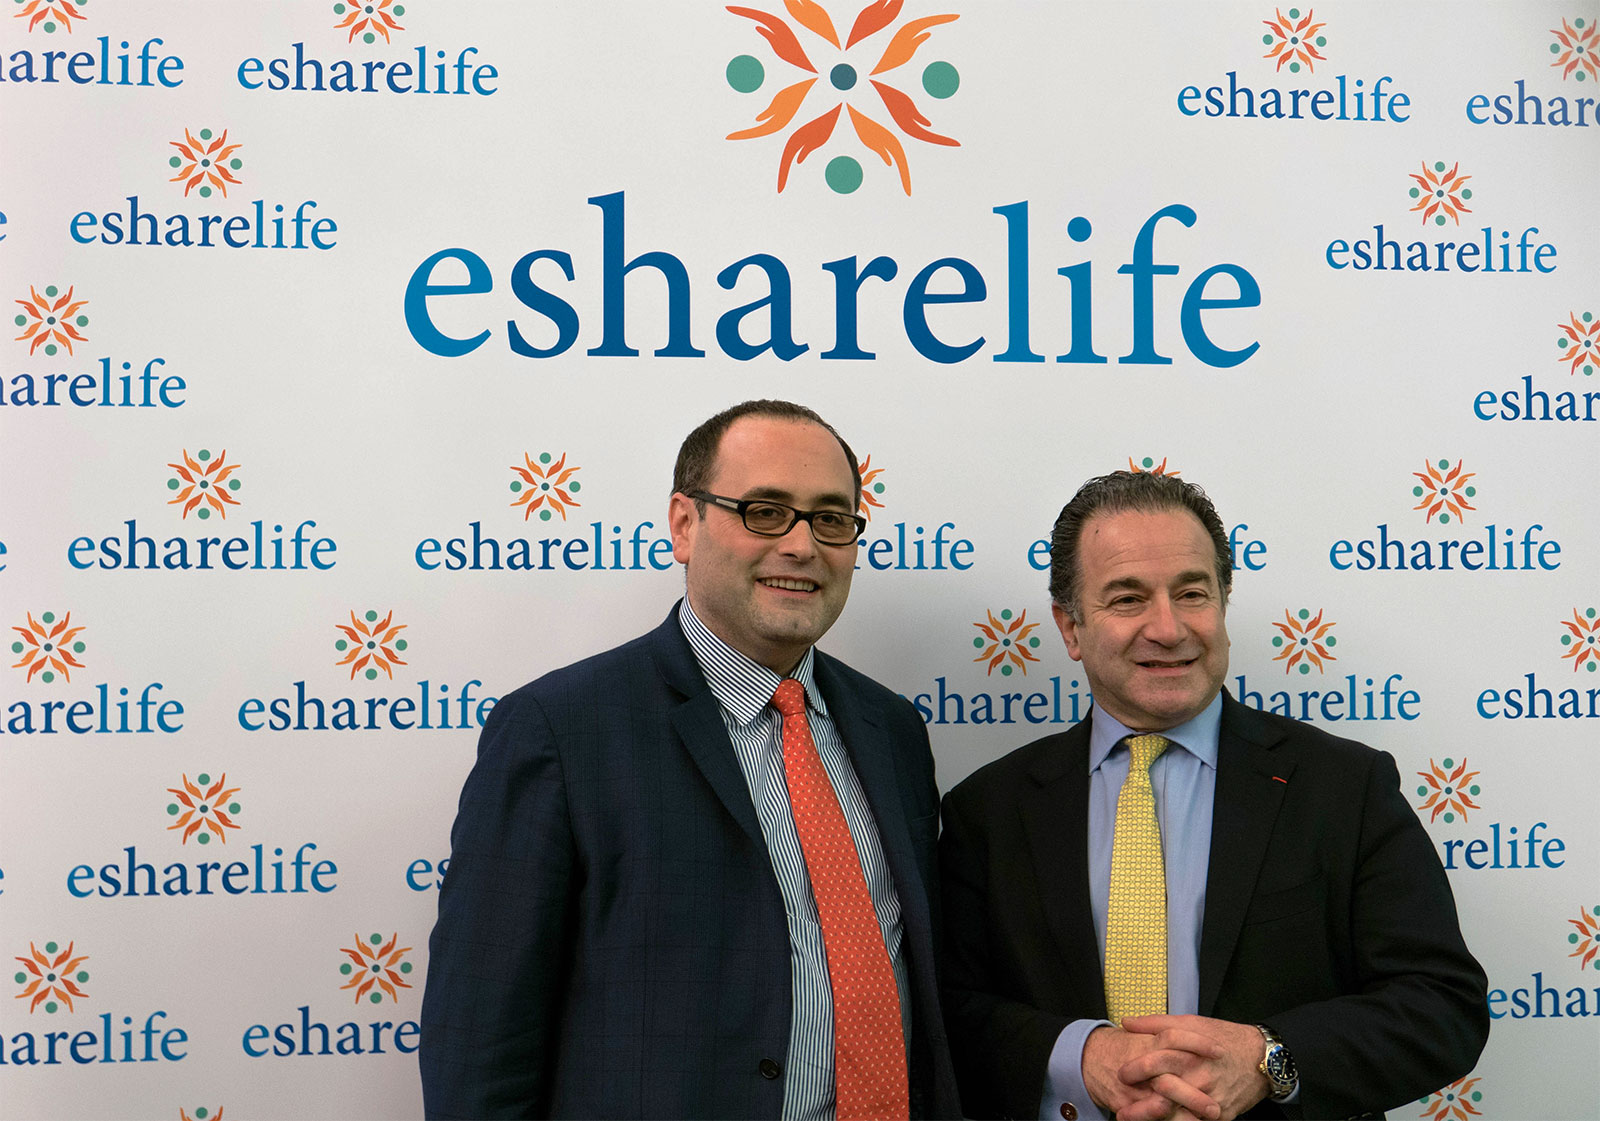 Esharelife charity foundation